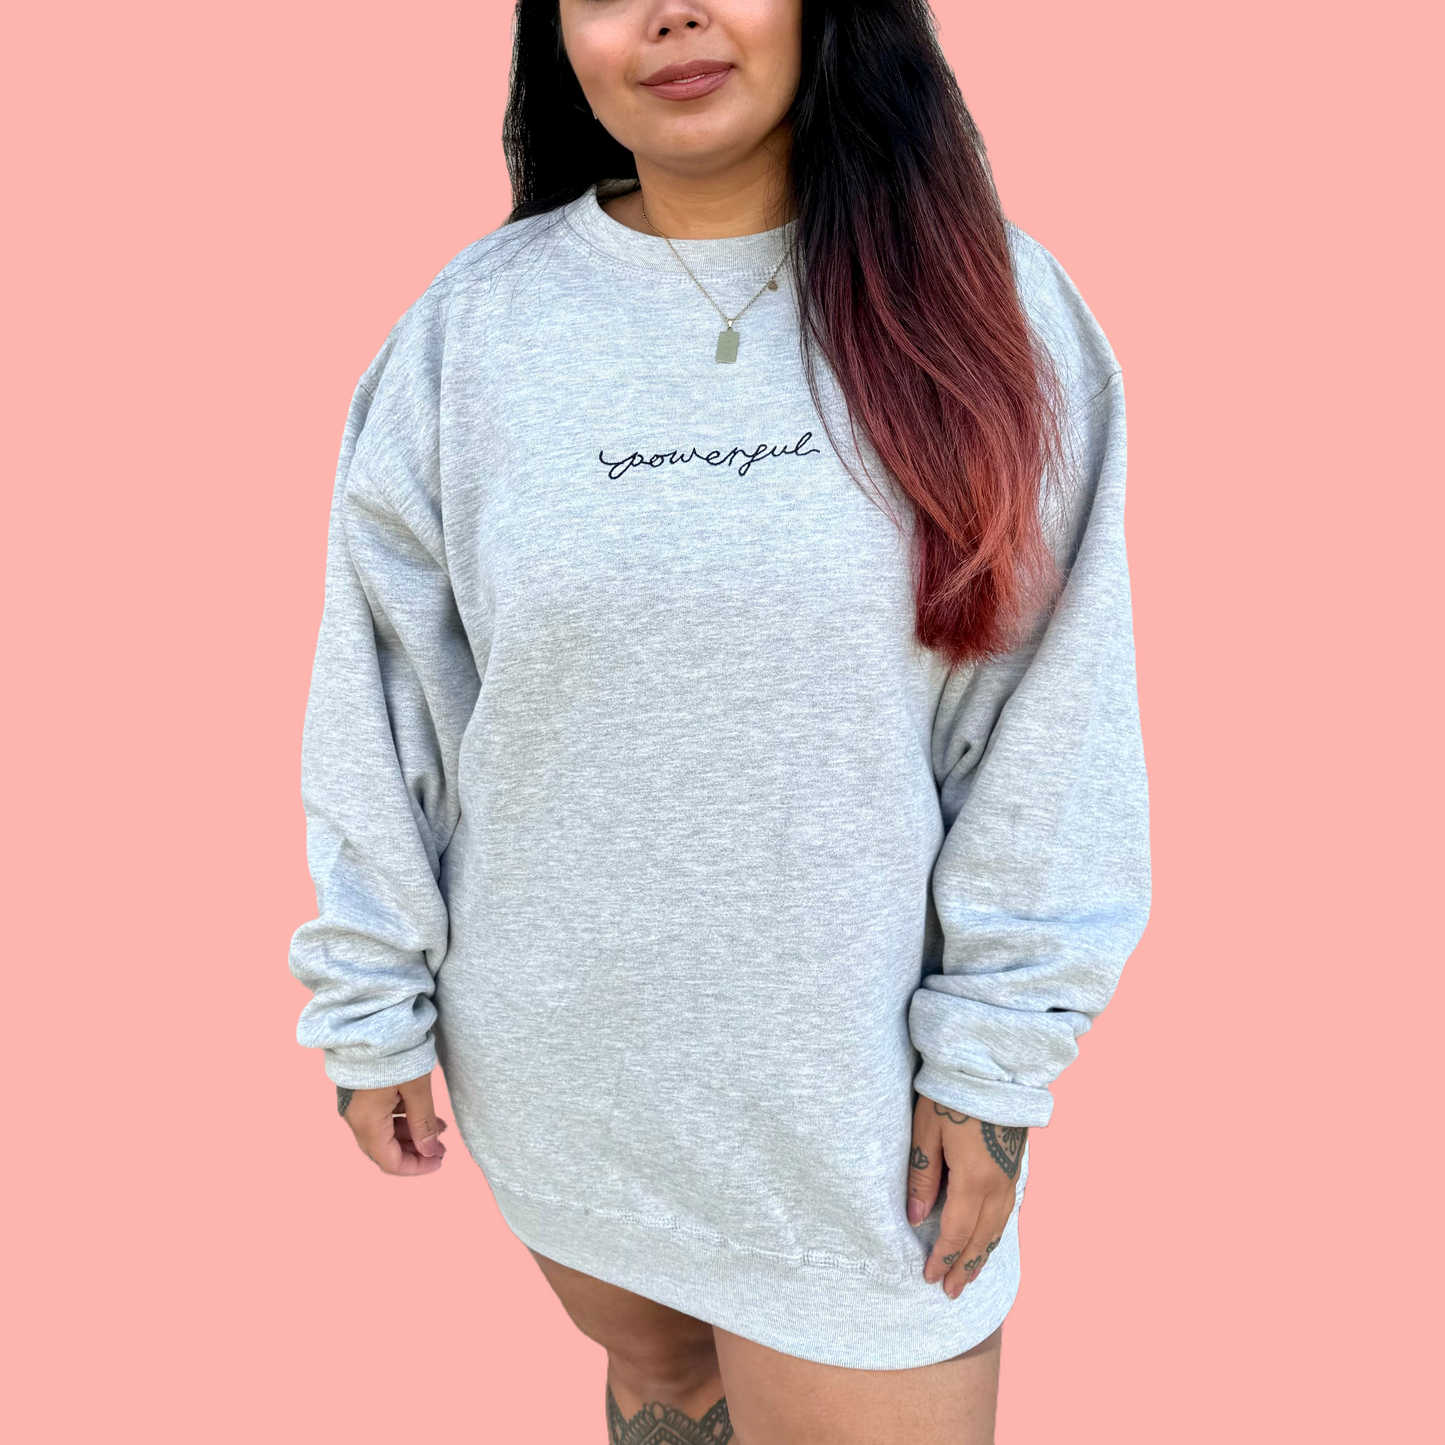 powerful embroidered sweatshirt - grey